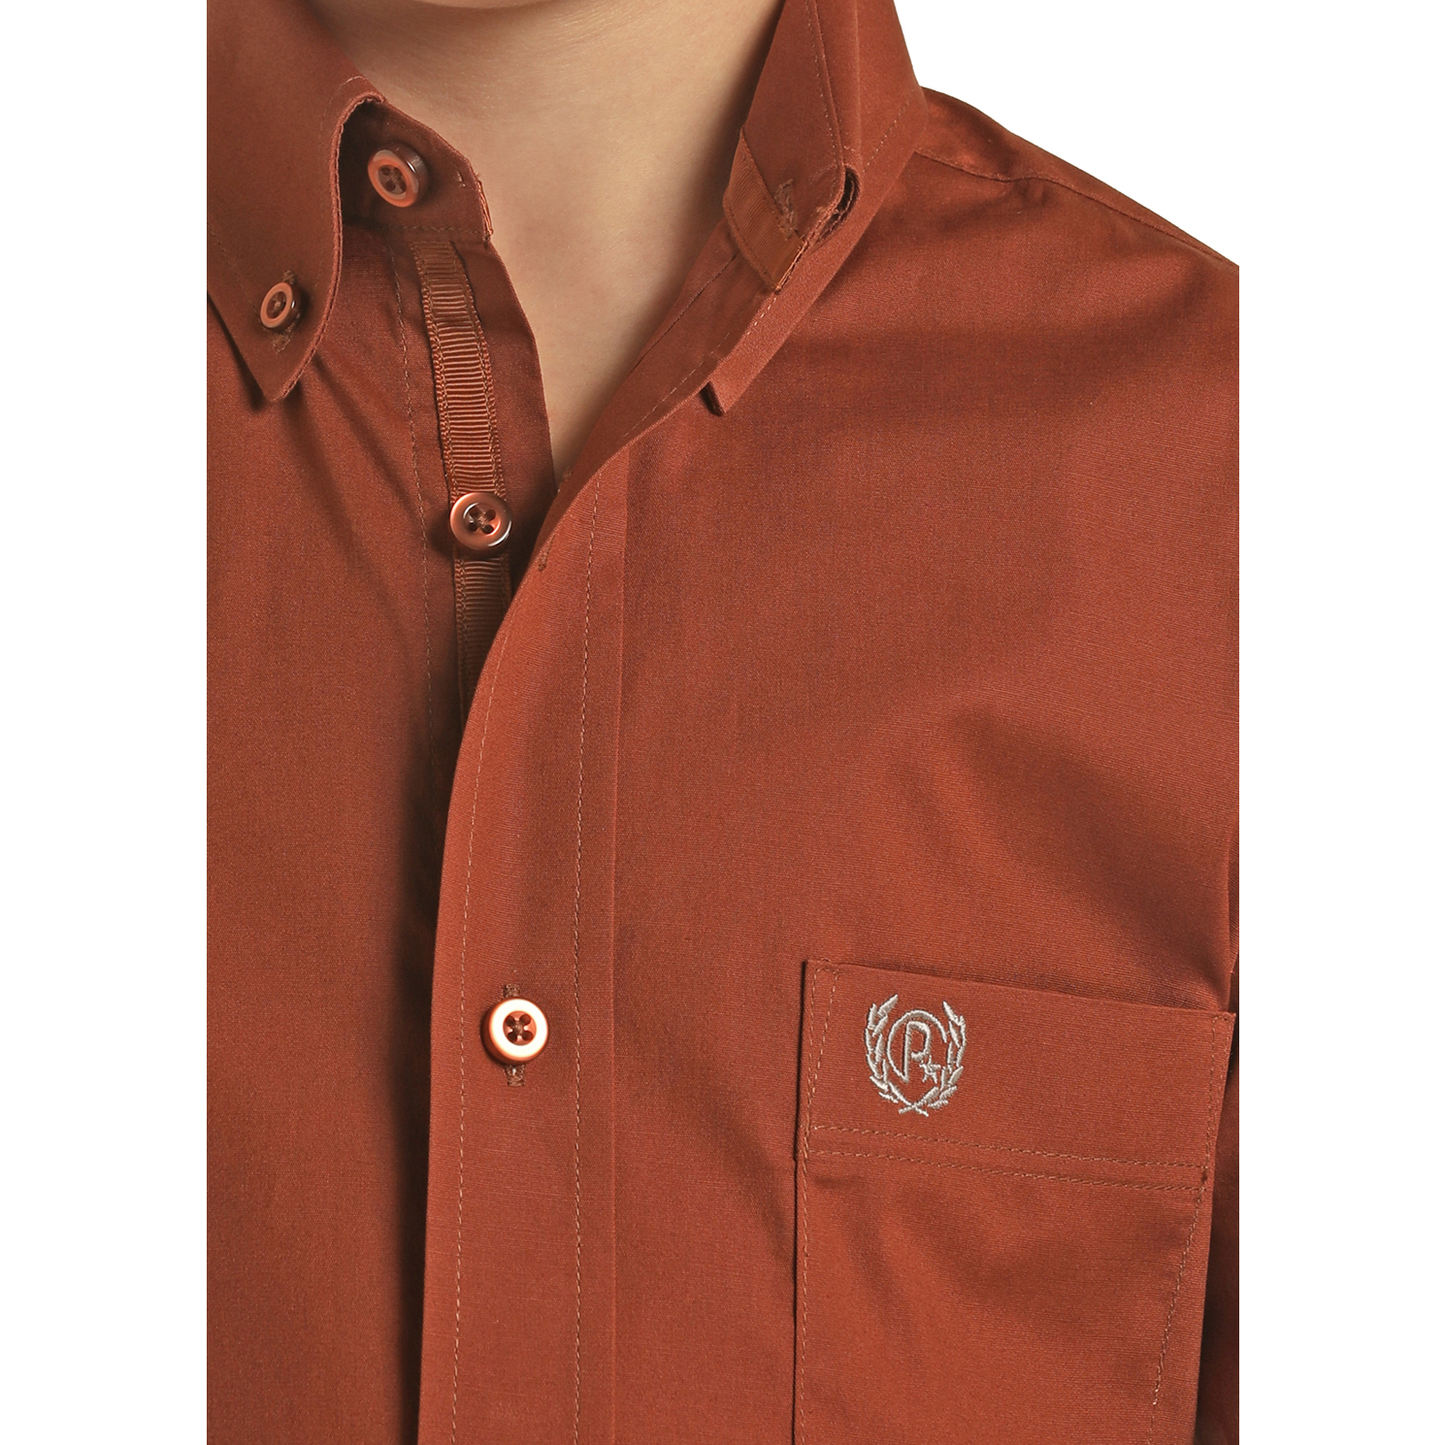 Panhandle Select® Youth Boy's Rust Solid Stretch Poplin Shirt PSBSODRZ2N-90